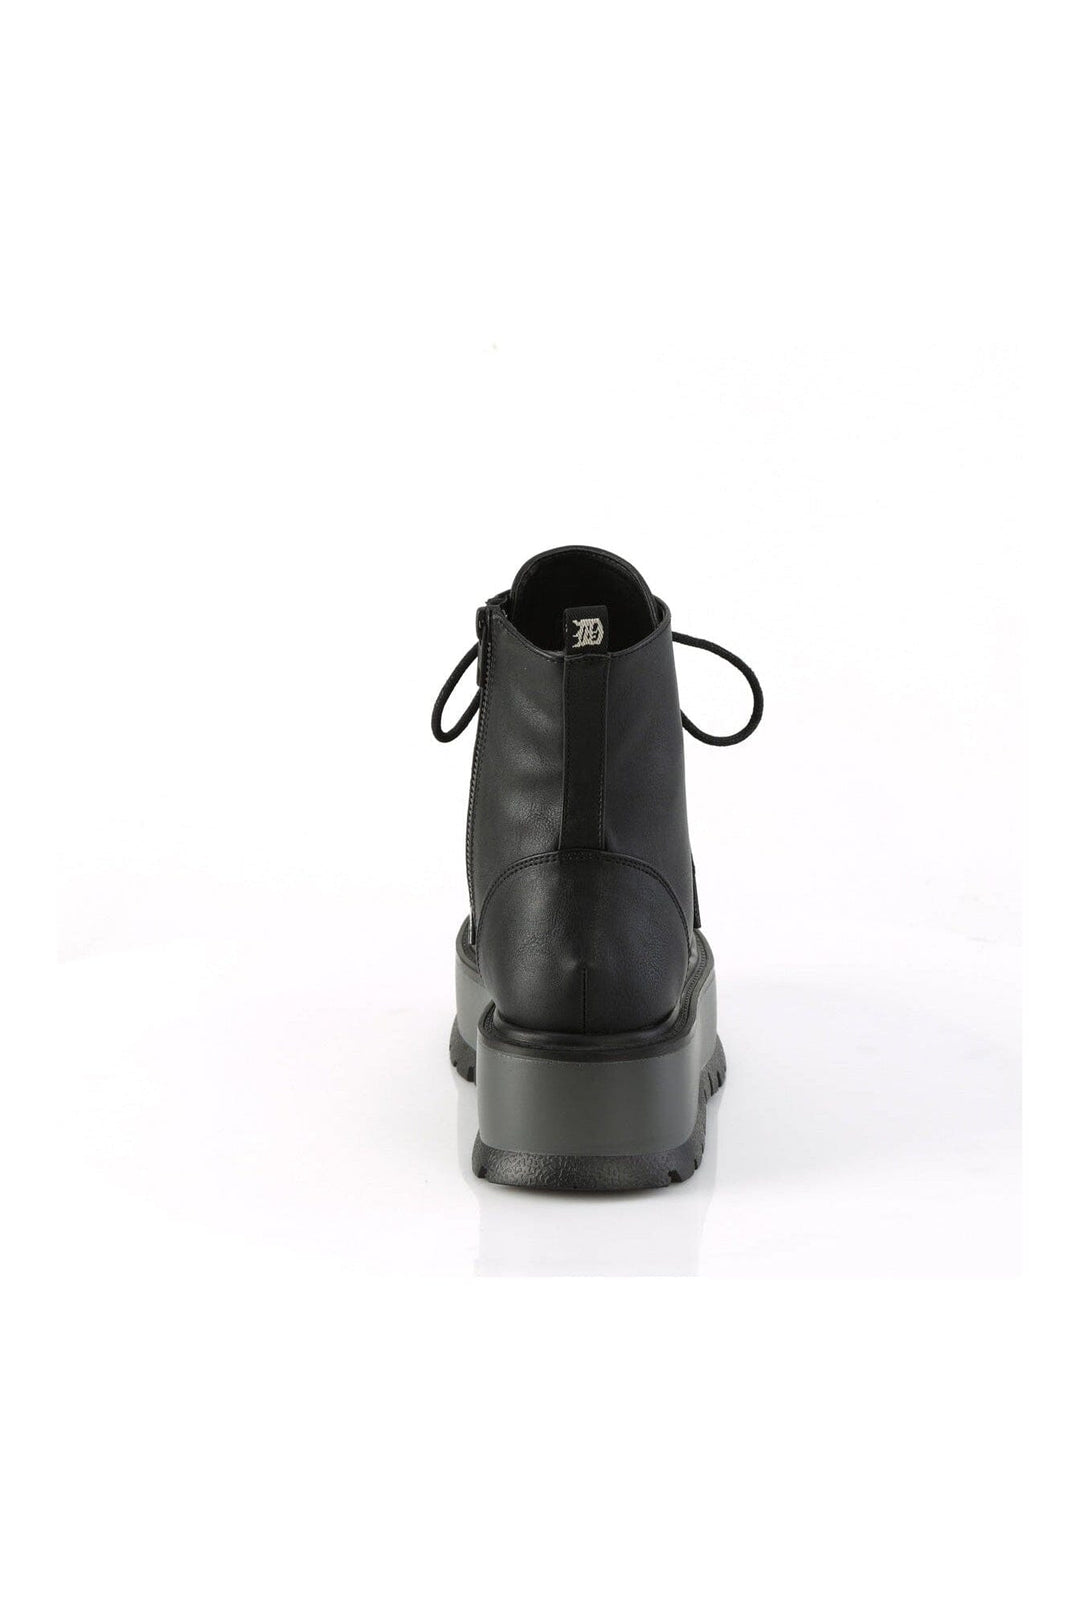 SLACKER-55 Black Vegan Leather Ankle Boot-Ankle Boots-Demonia-SEXYSHOES.COM